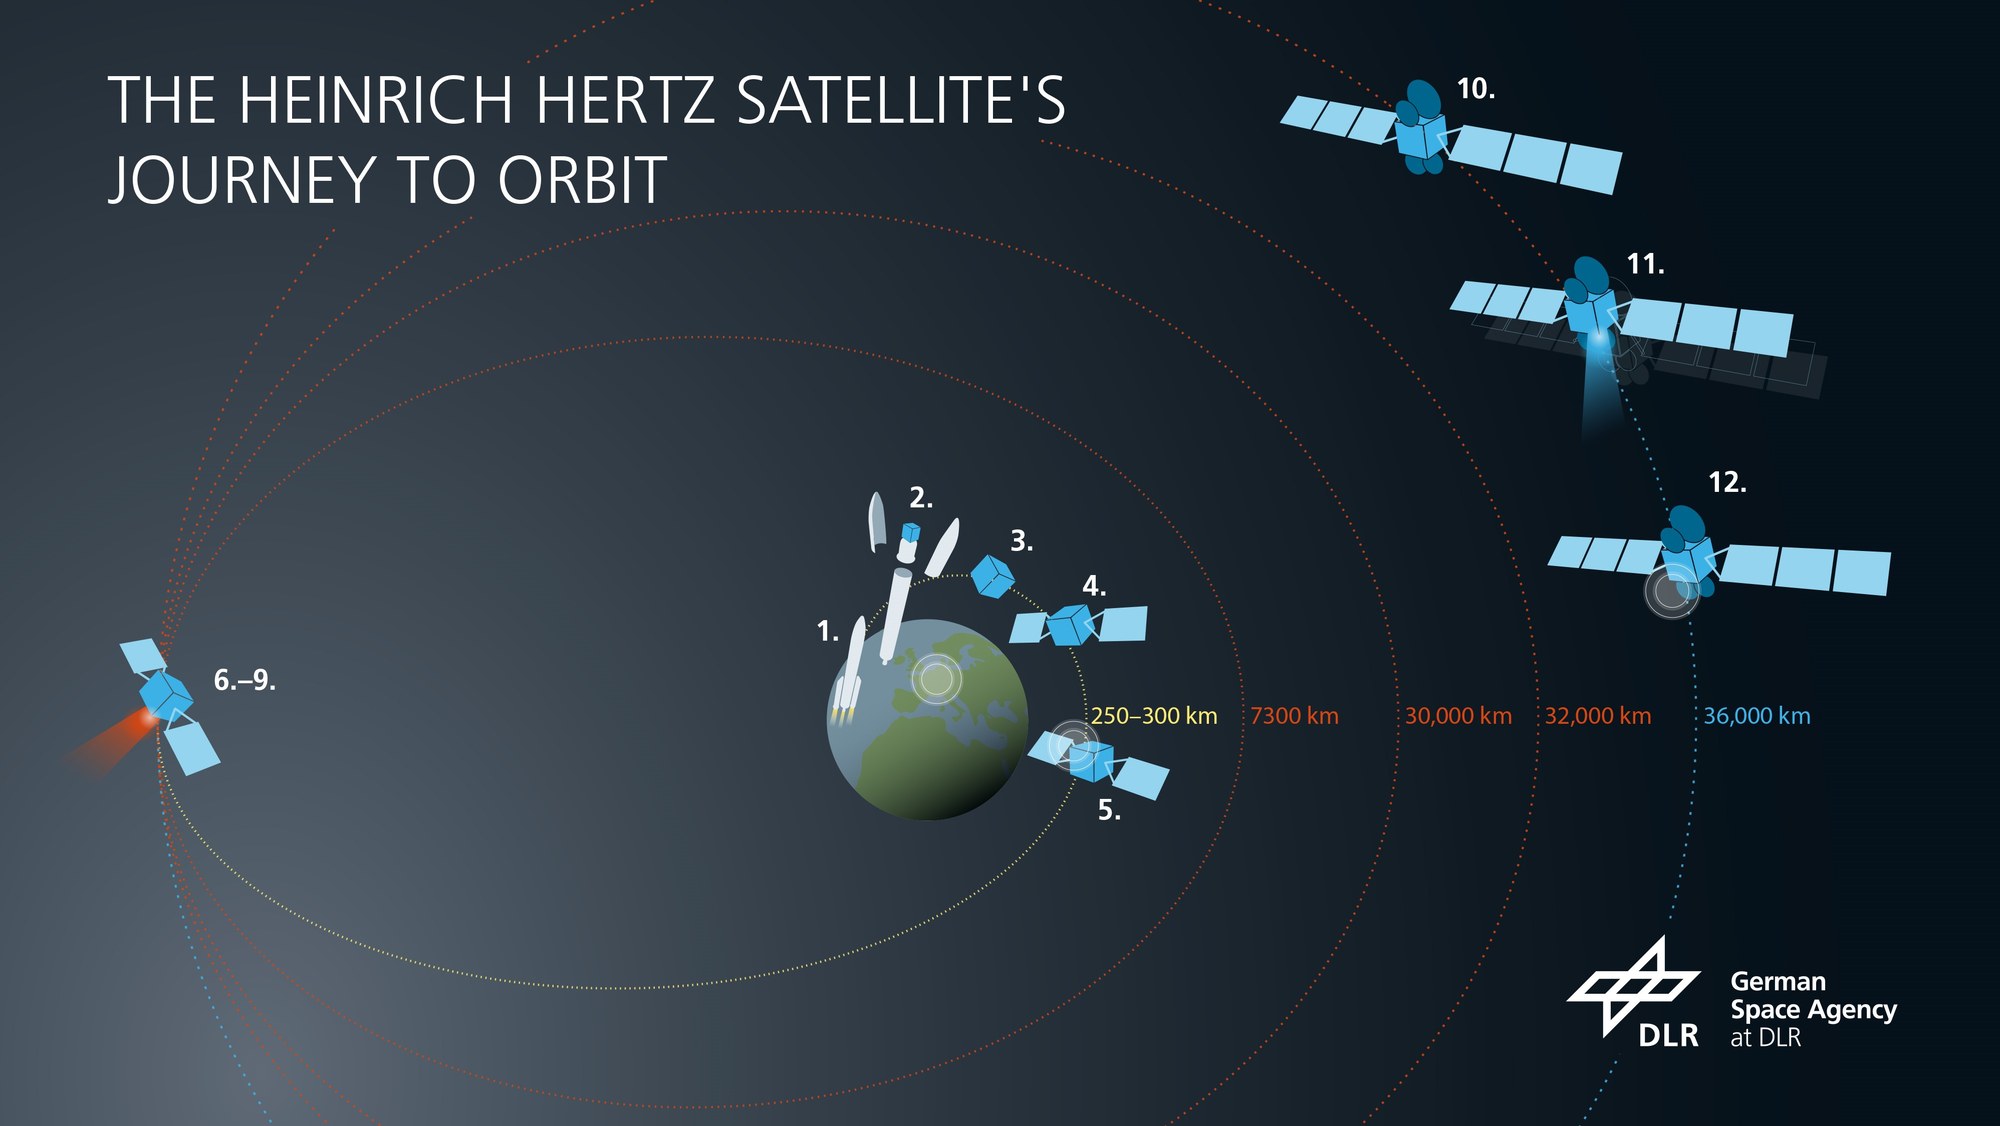 The journey of the Heinrich Hertz satellite